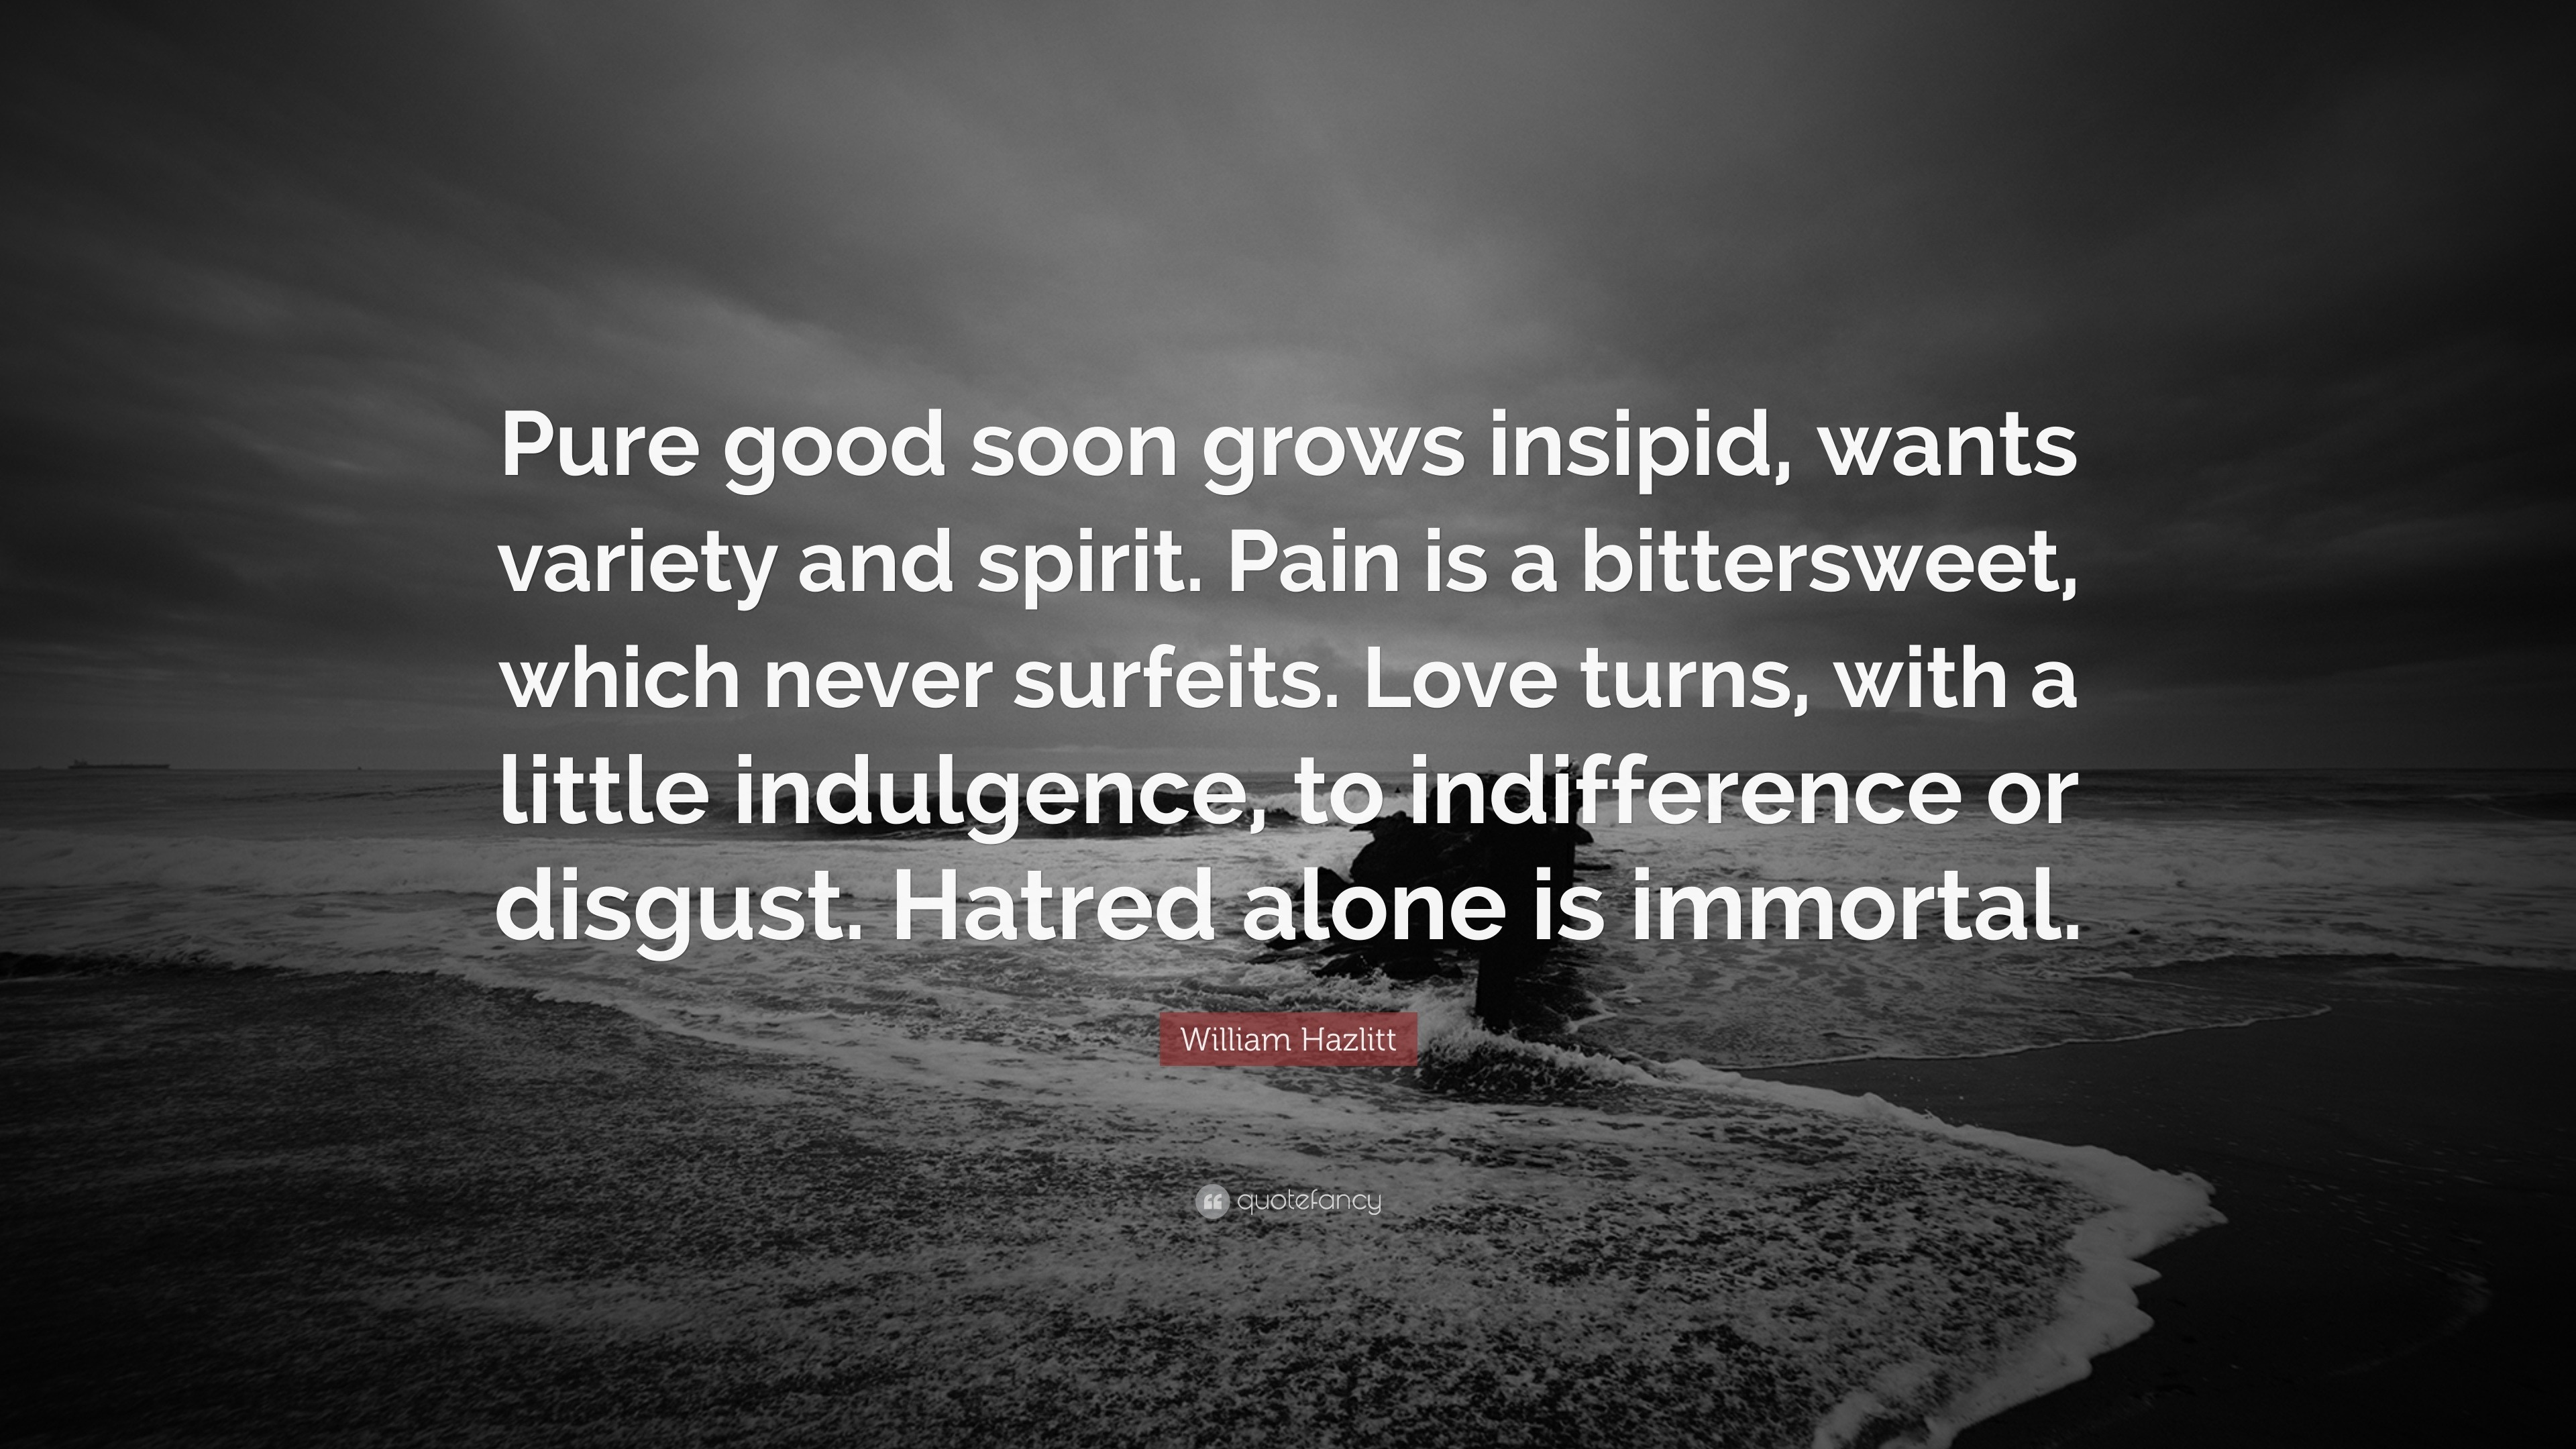 William Hazlitt Quote “Pure good soon grows insipid wants variety and spirit